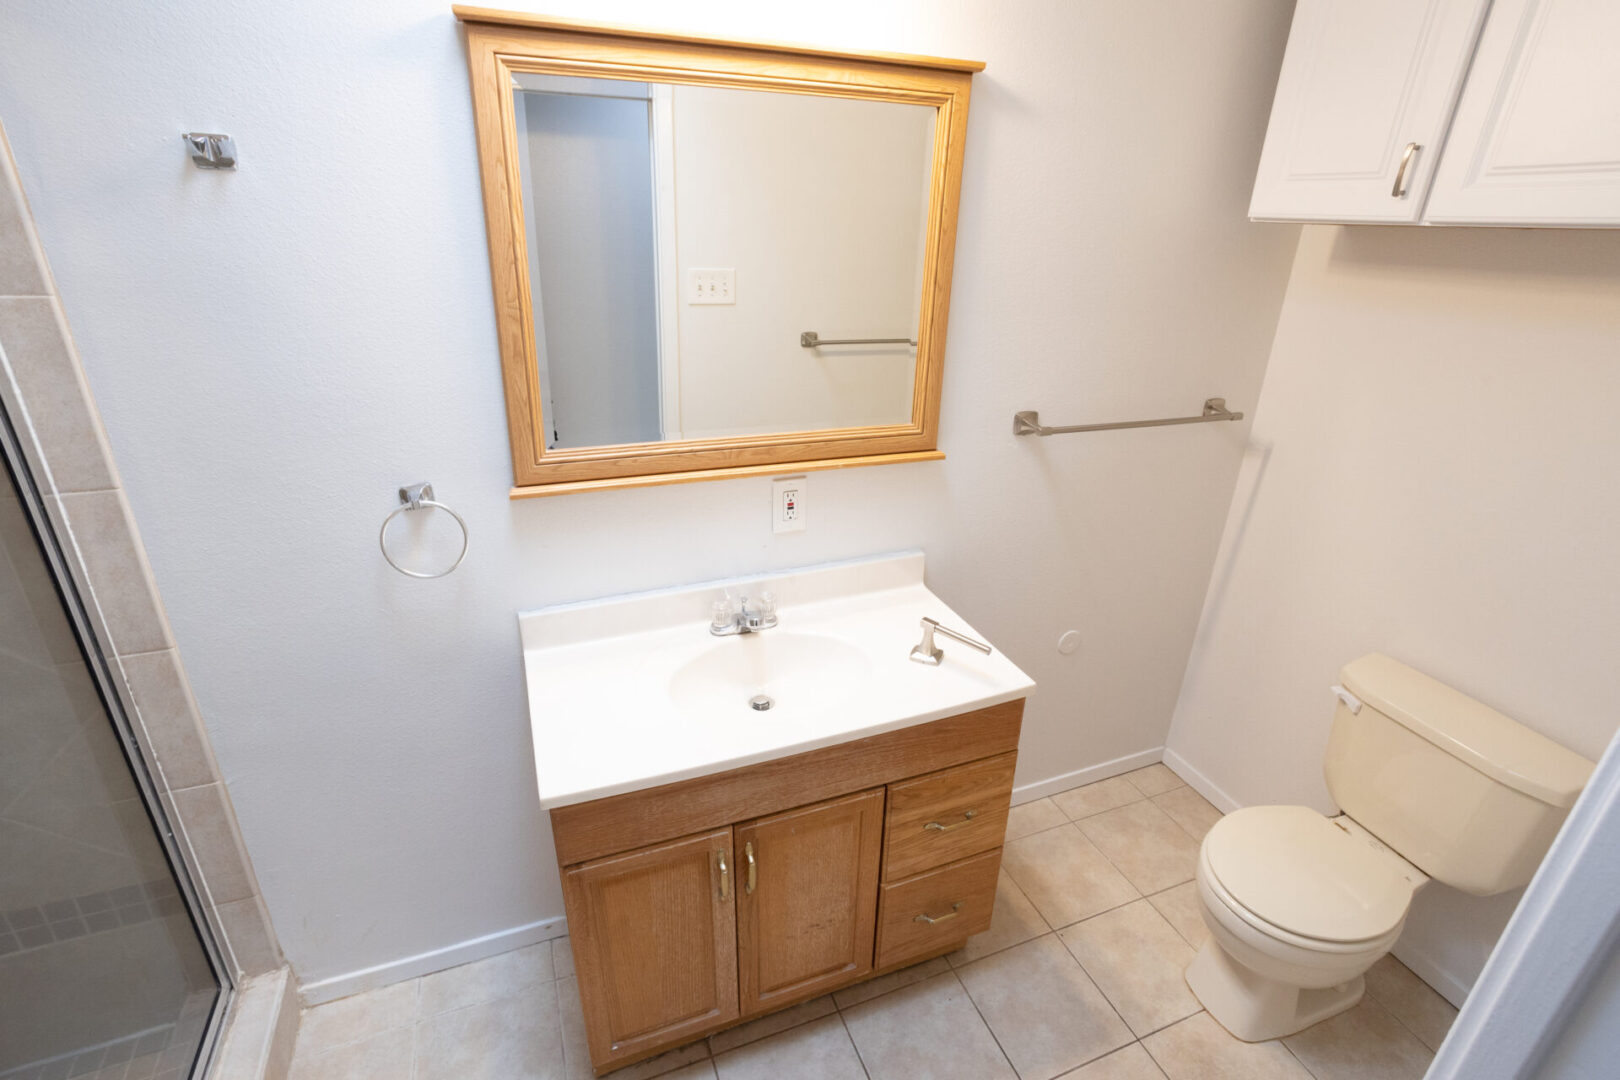 washroom with mirror